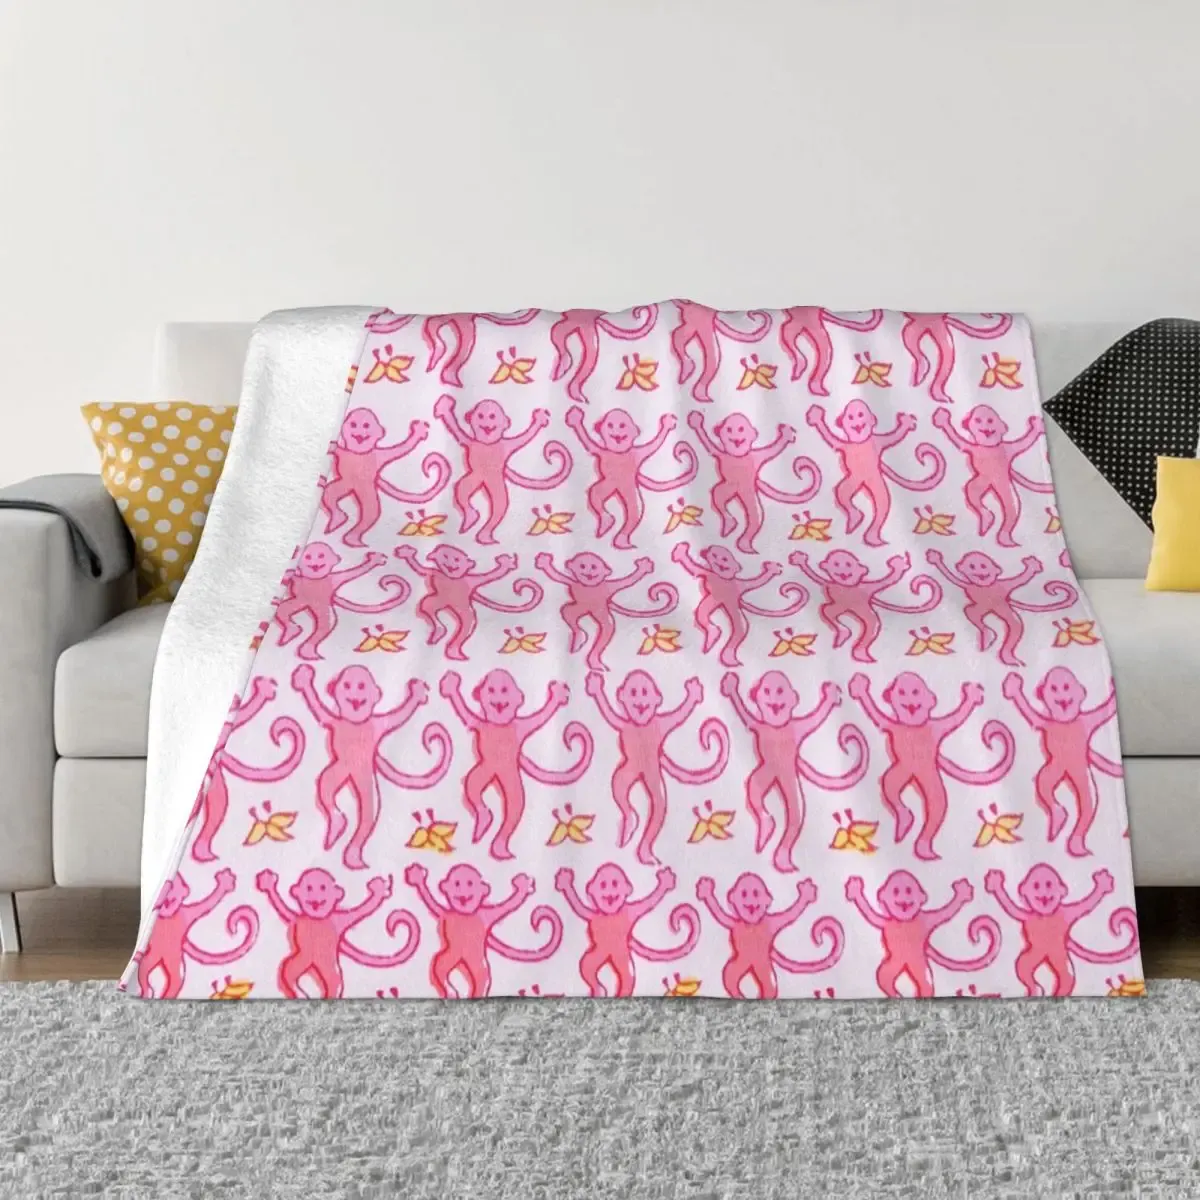 Defina cobertores de coelho rolos rosa cobertores coral lã de coral outono/inverno animal fofo super macio cobertor para colcha de escritório de cama